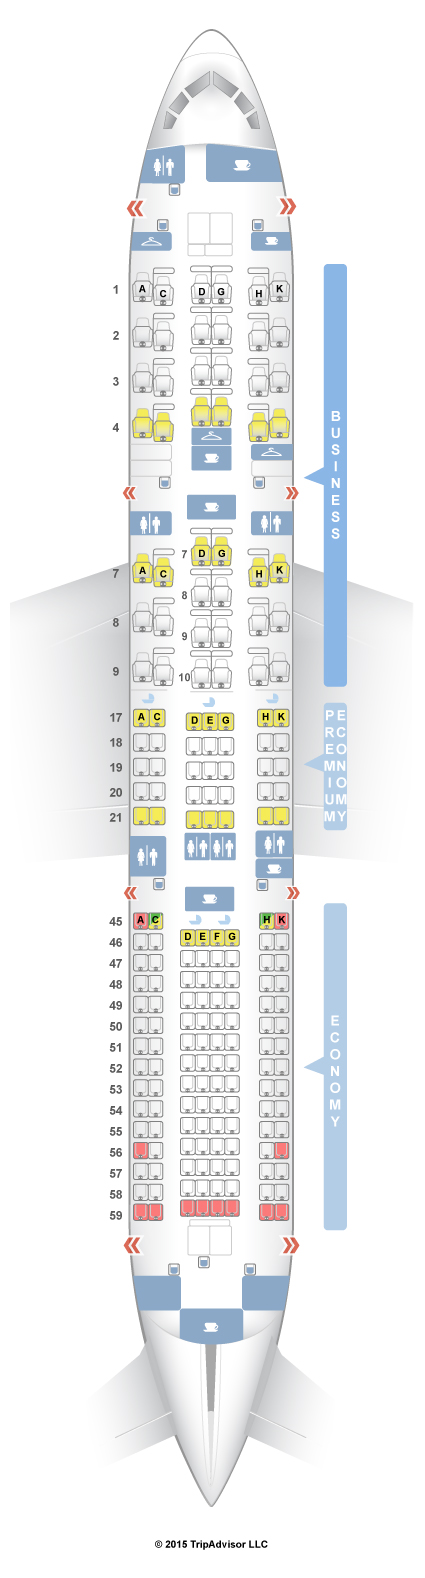 Norwegian Airlines Dreamliner Seating Chart